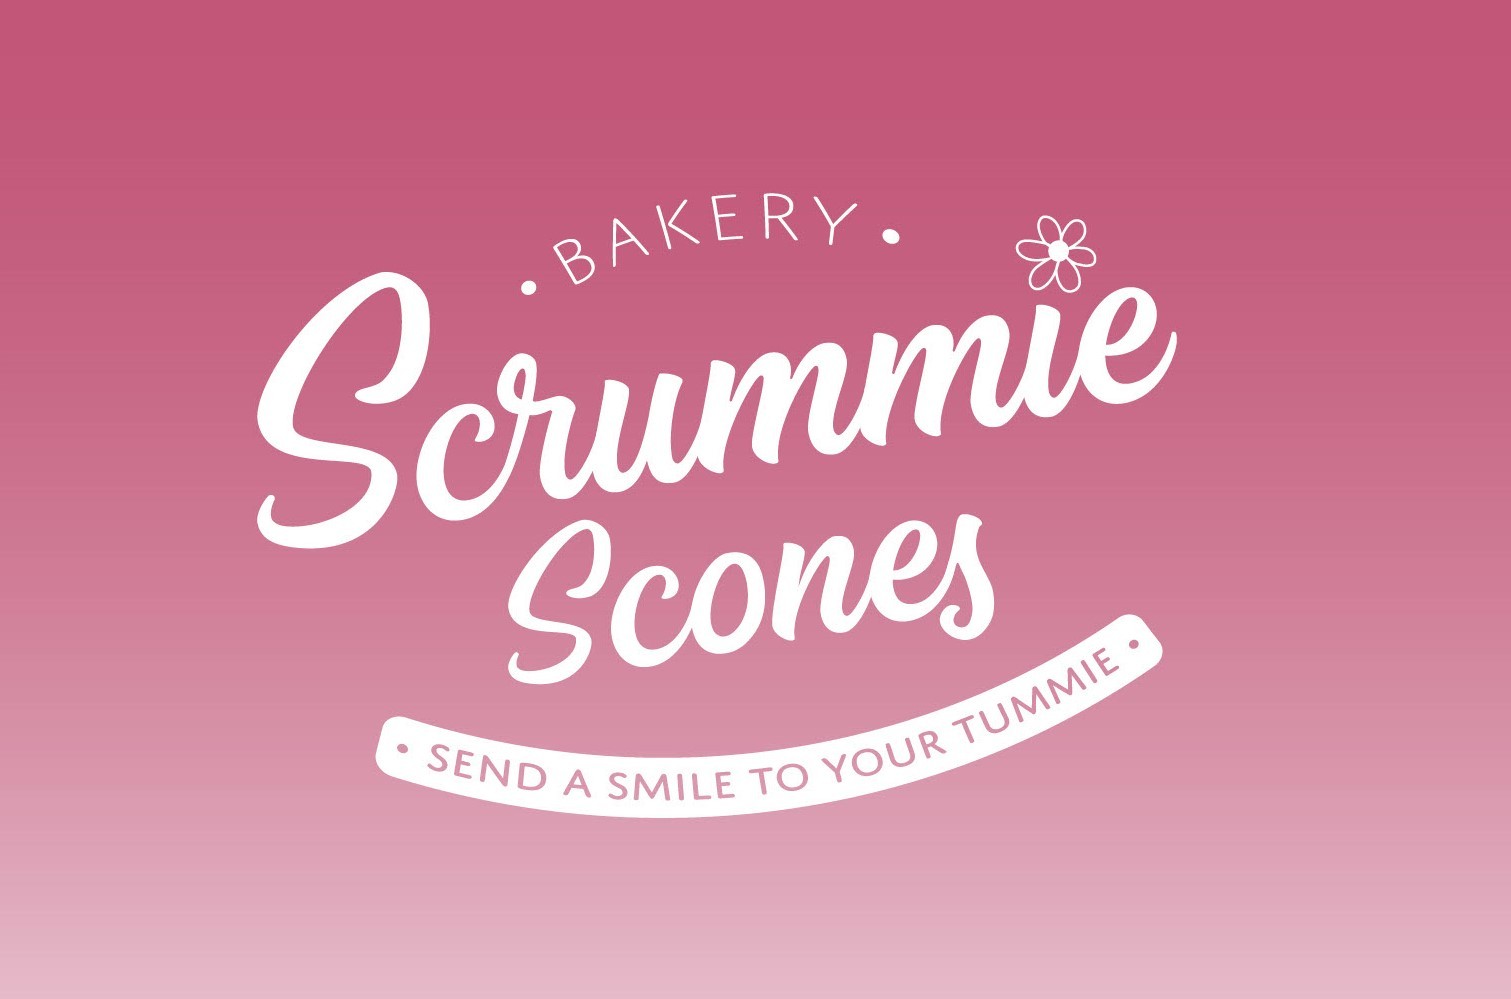 Scrummie Scones Bakery logo - Business in Manotick